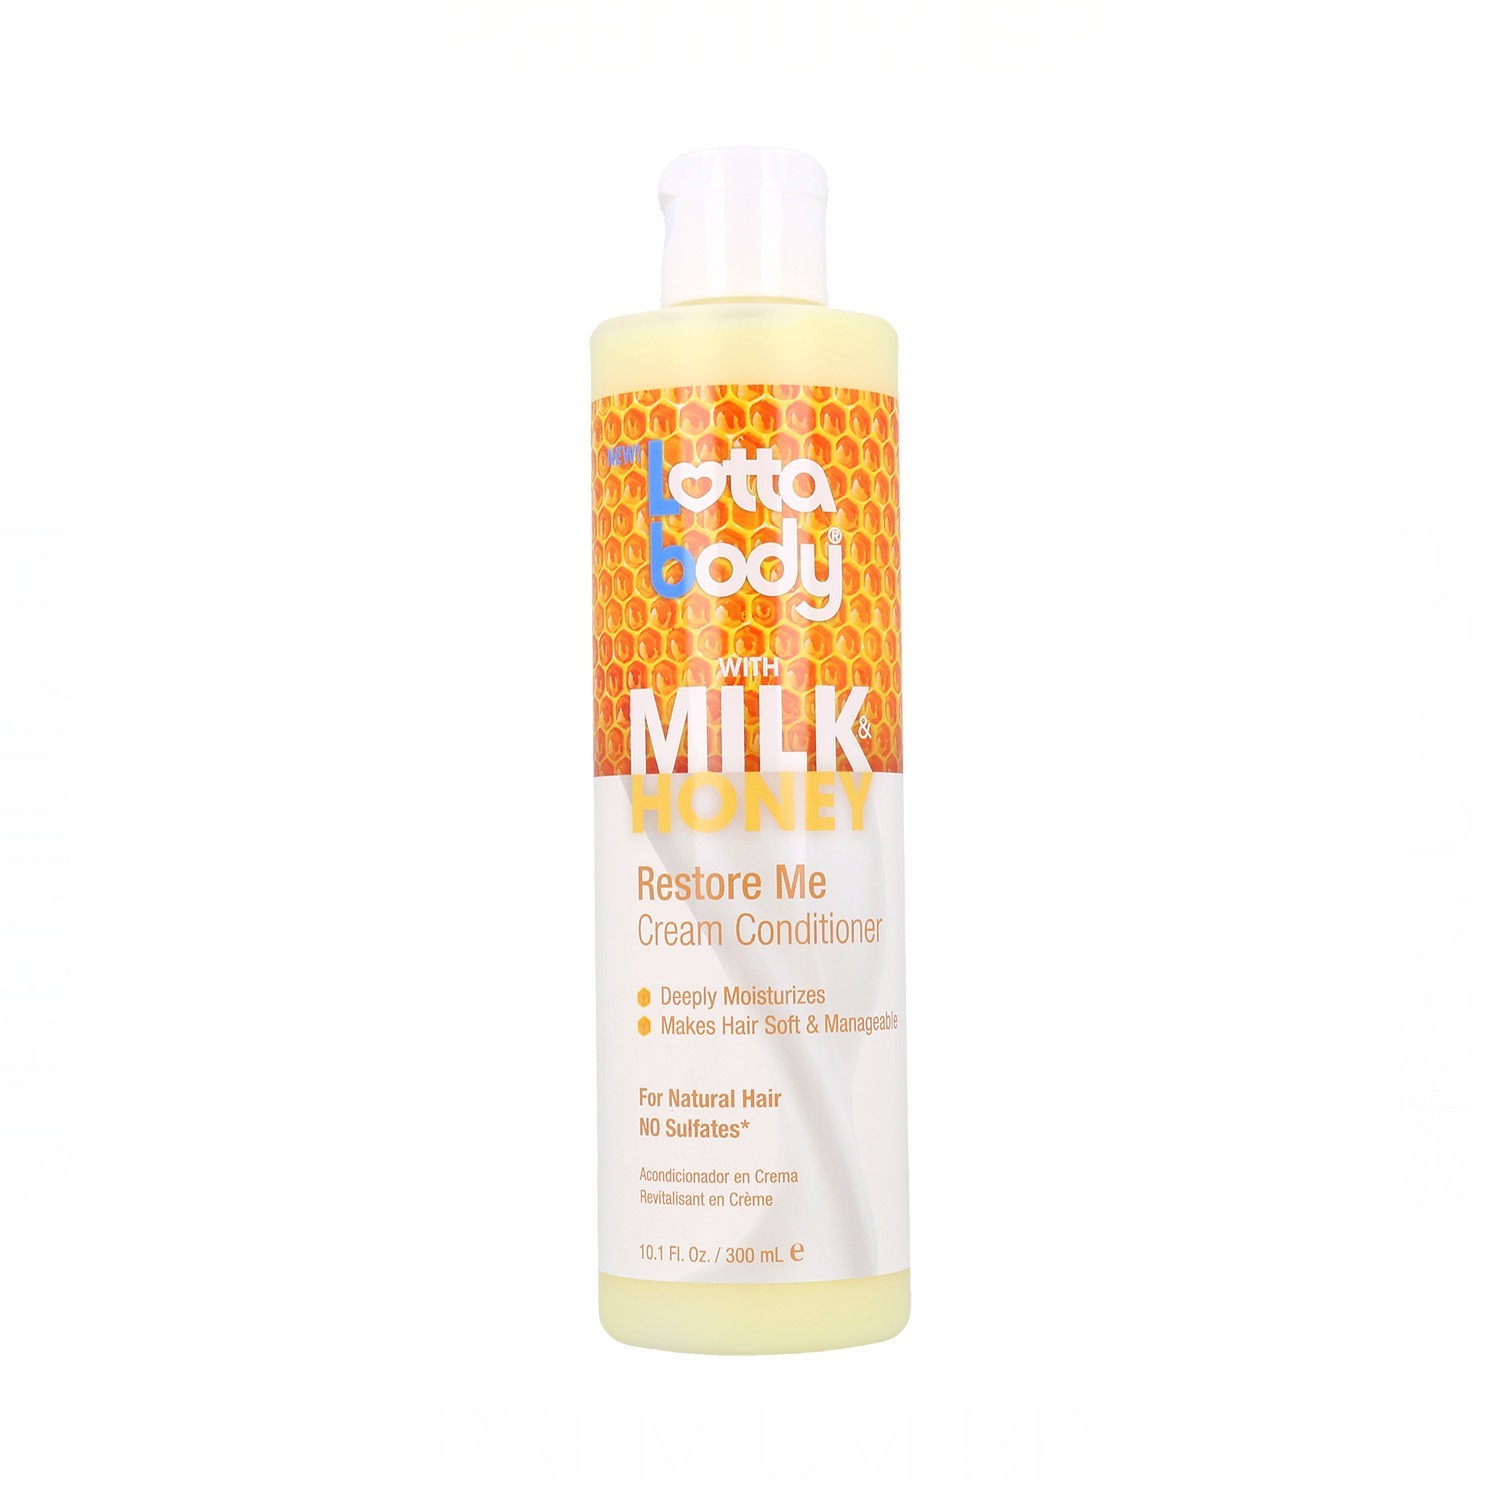 Lottabody Milk & Honey Cream Conditioner 300 ml (Restore Me)